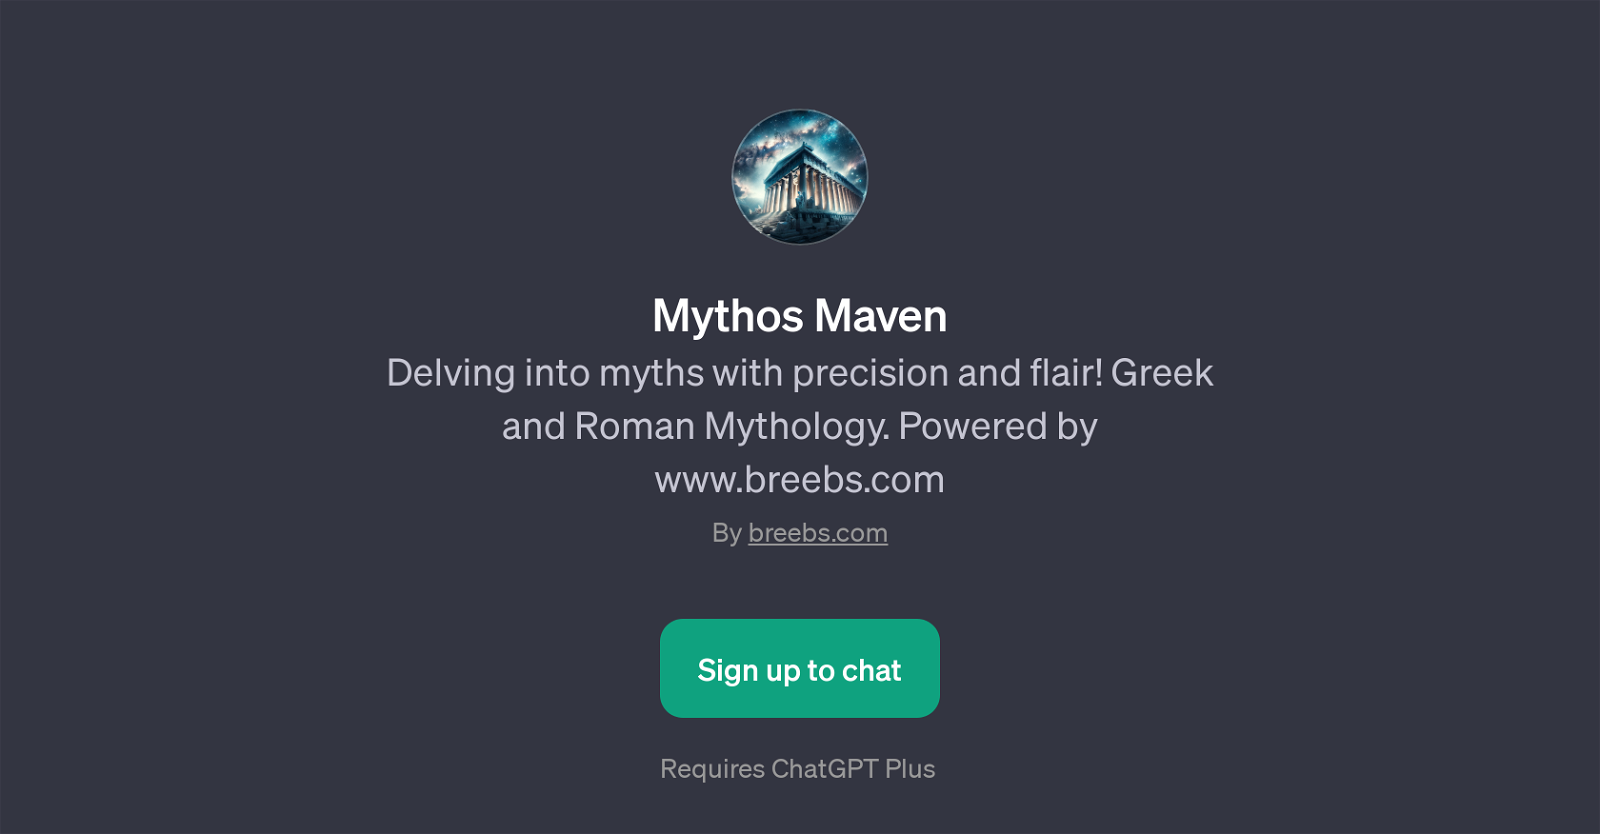 Mythos Maven website